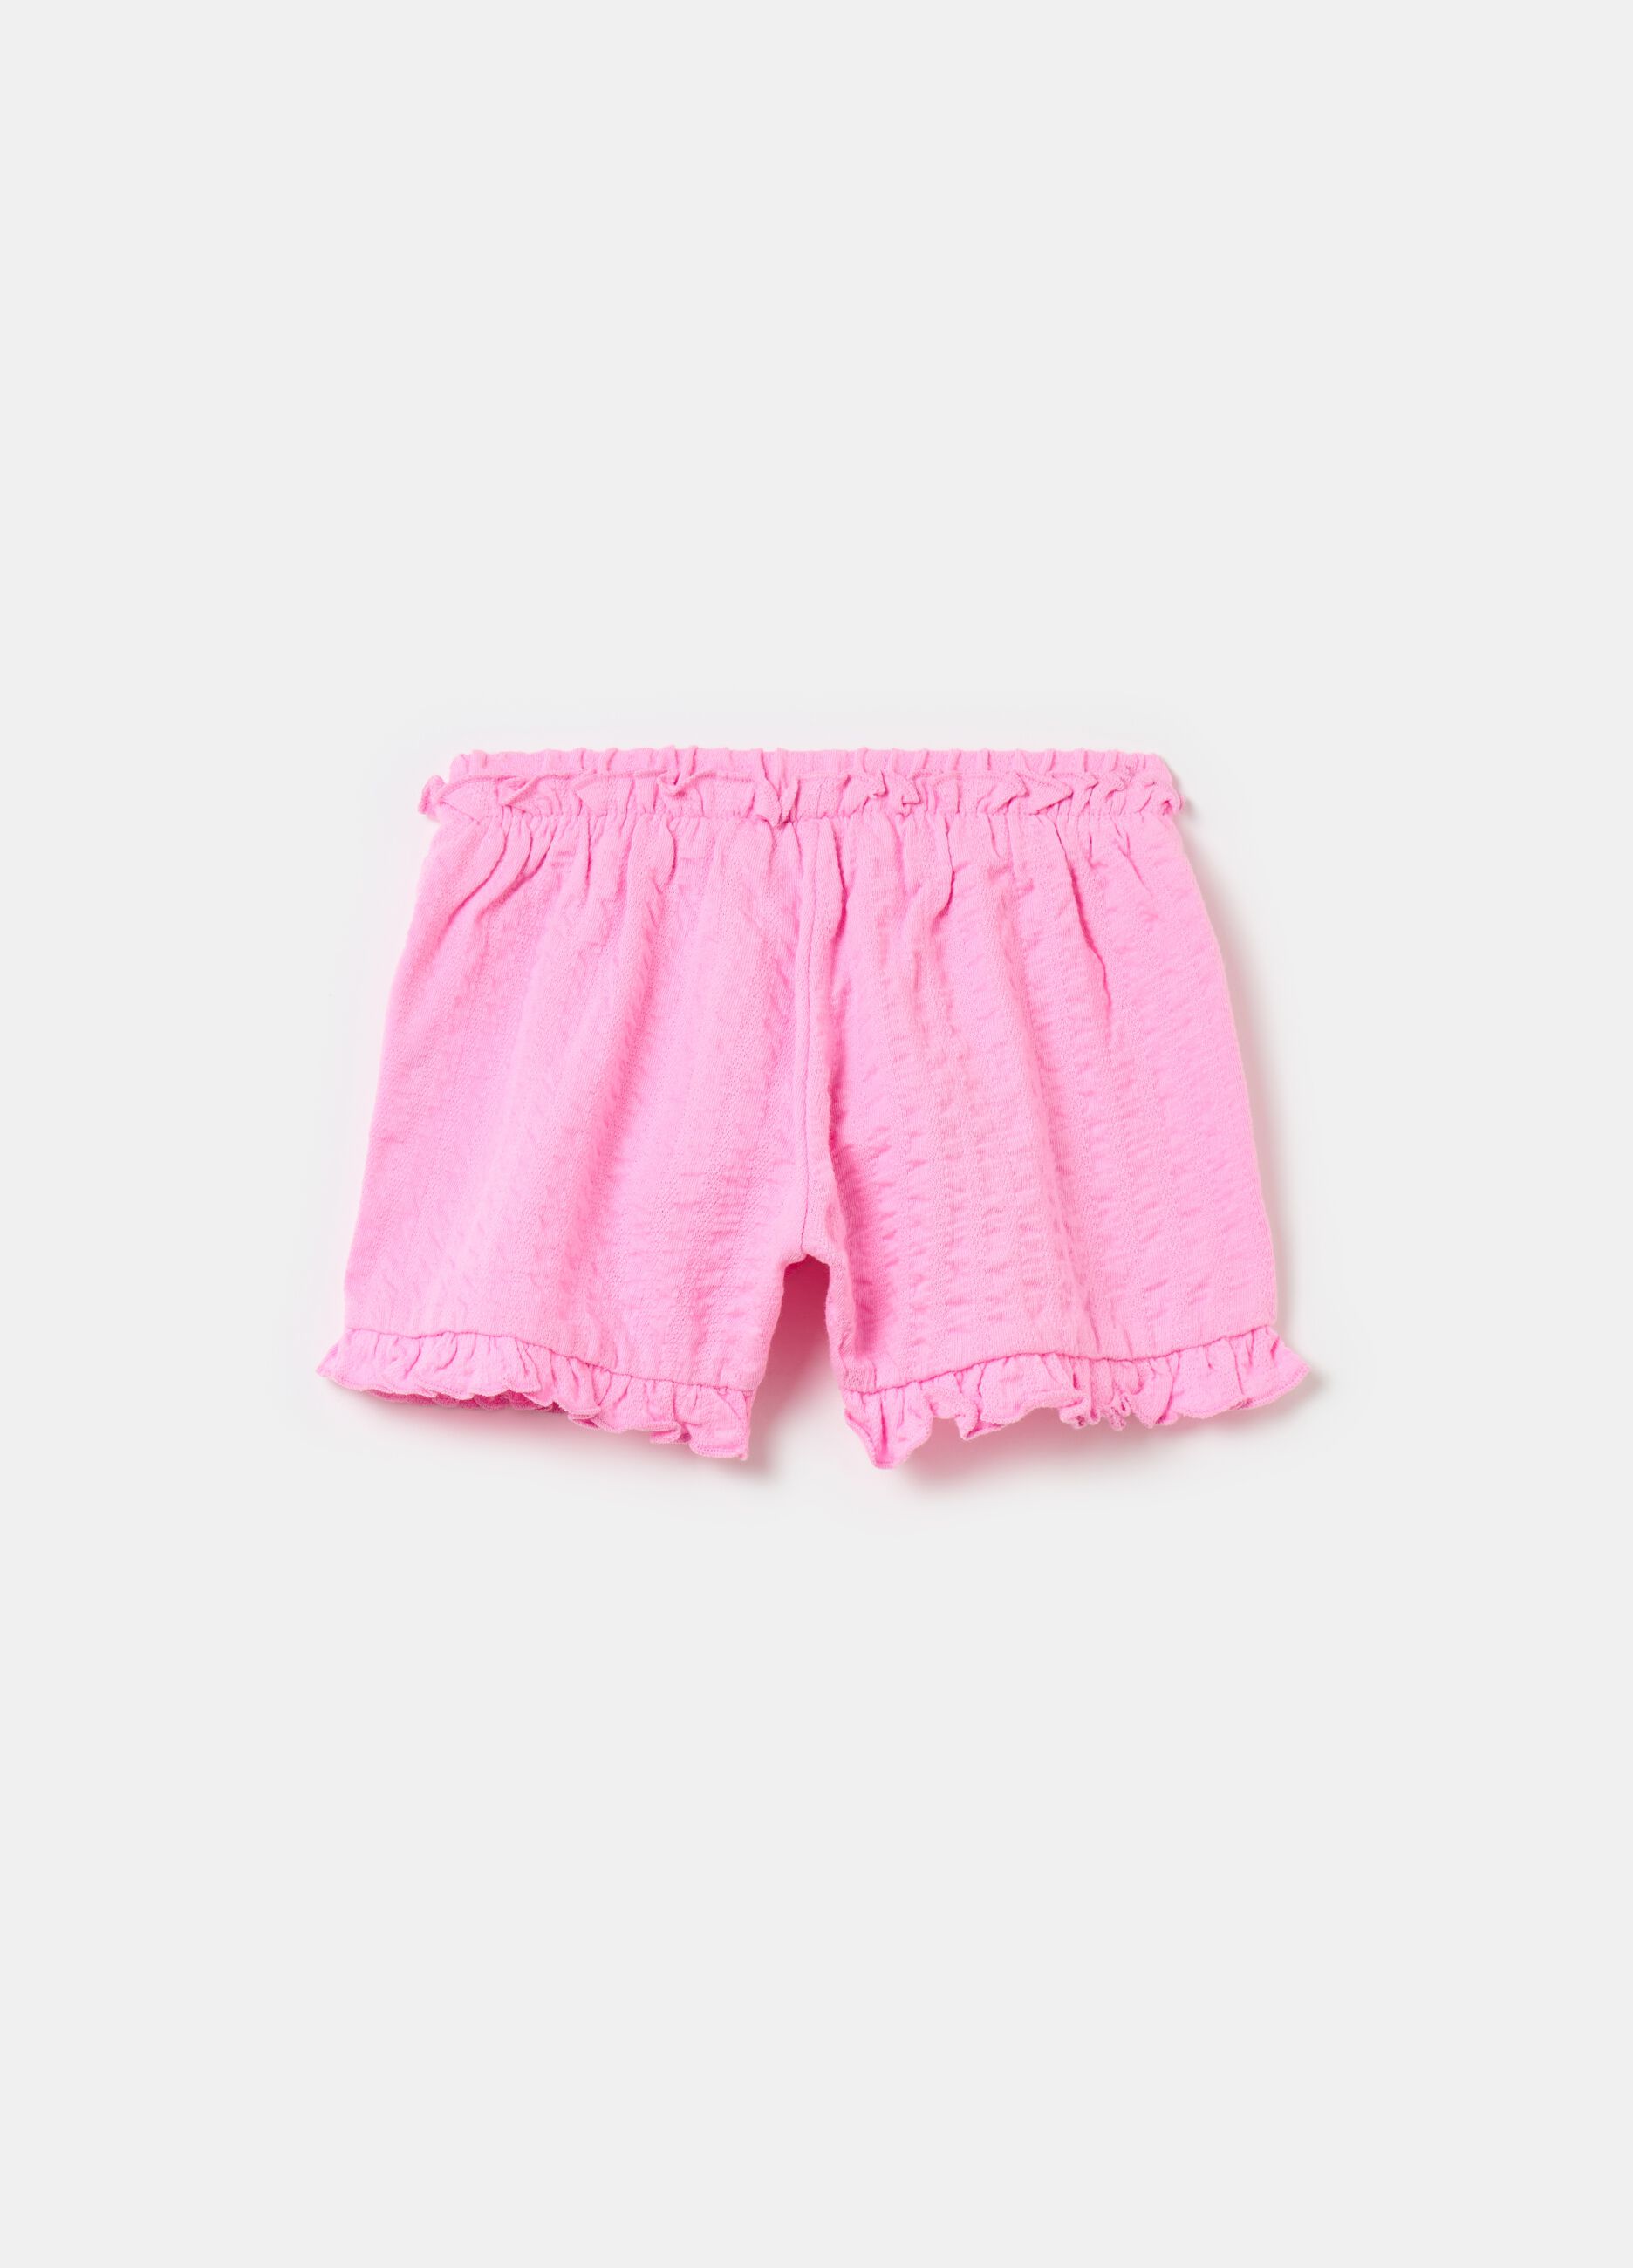 Jacquard shorts with frills